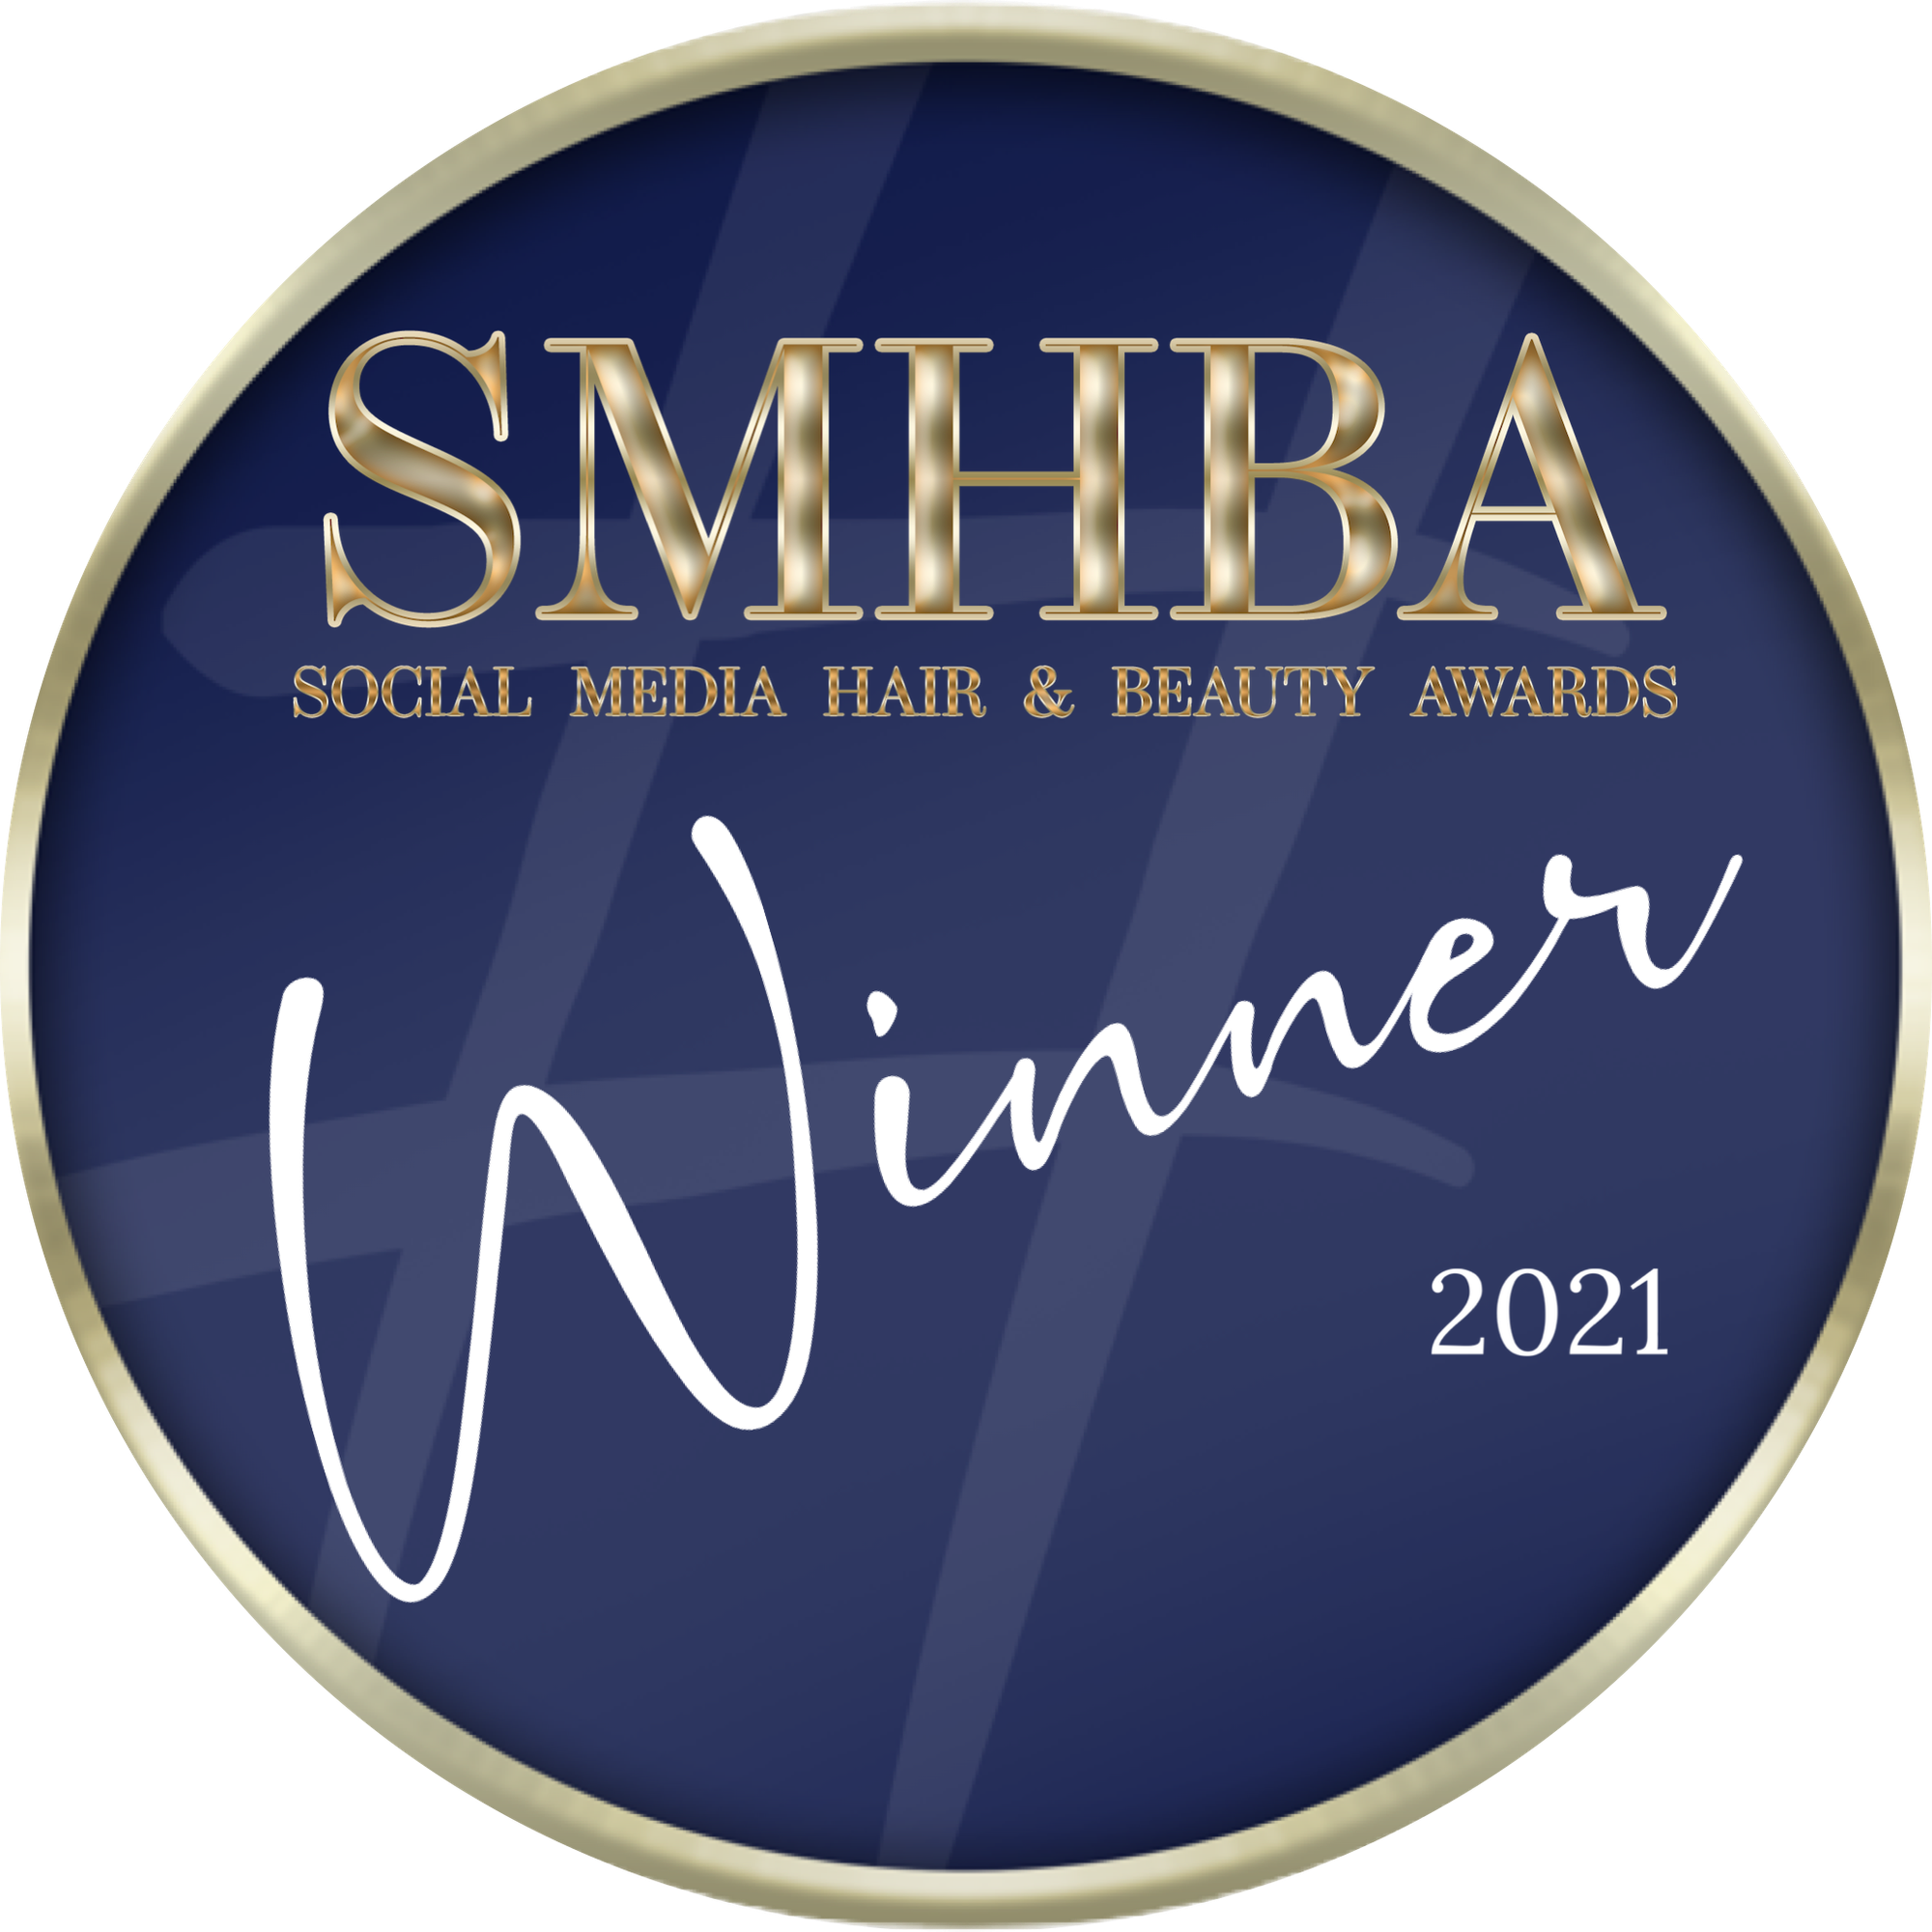 Winner of Best Hairstylist 2021 in the SMHBA Industry Awards!